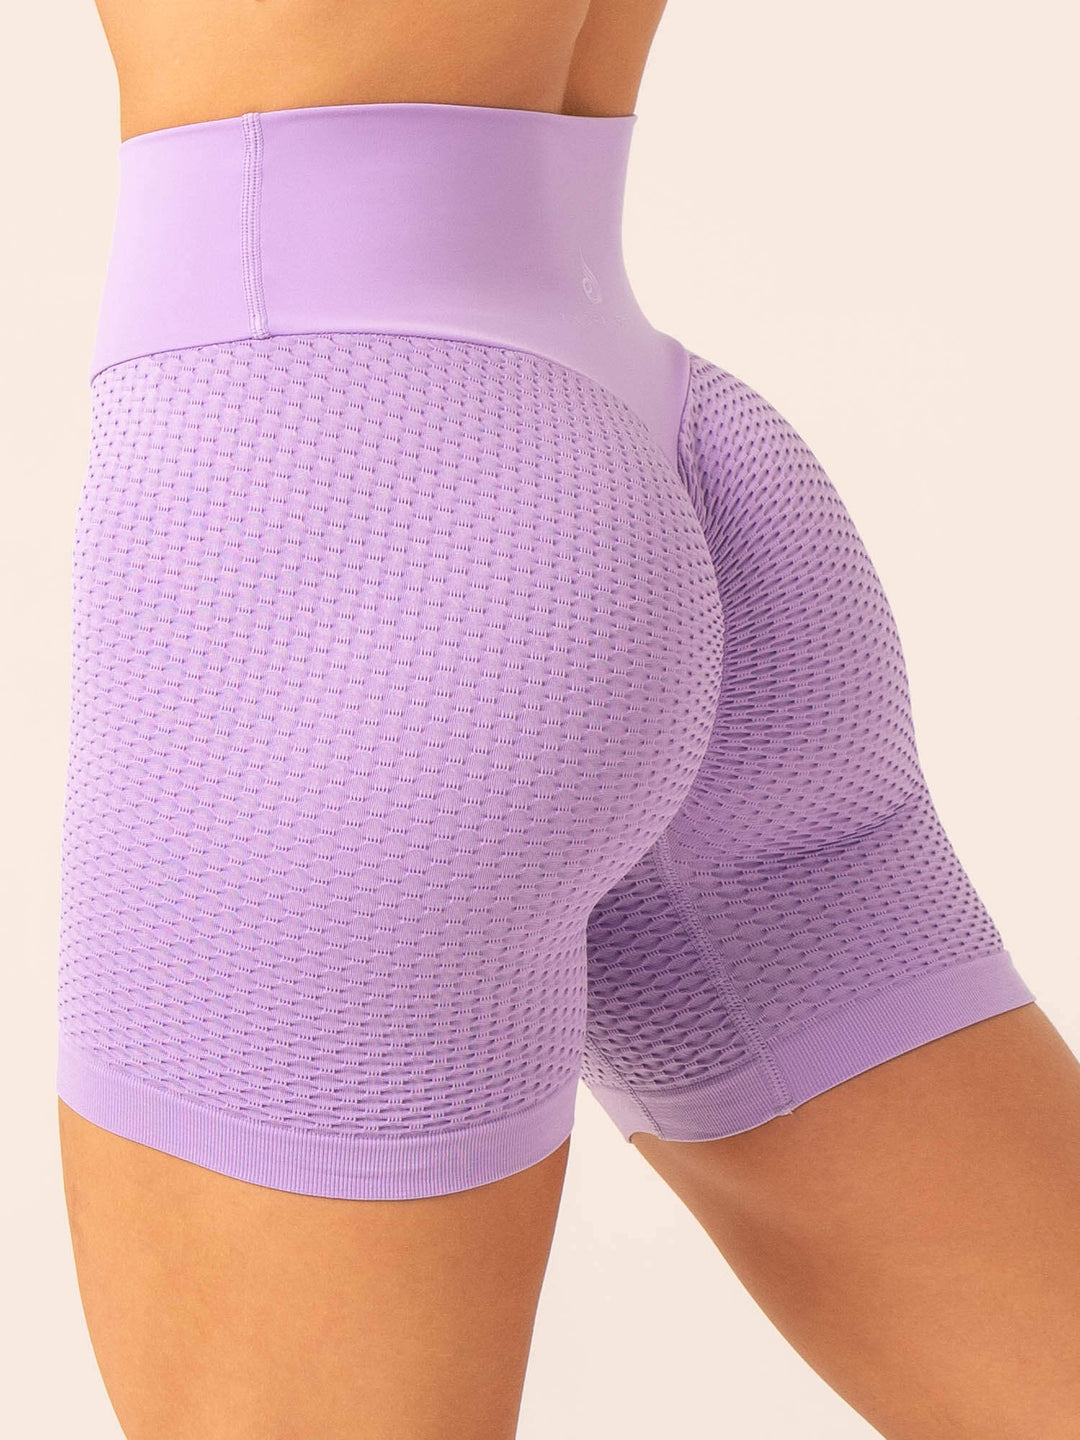 Honeycomb Scrunch Seamless Shorts - Lavender Clothing Ryderwear 